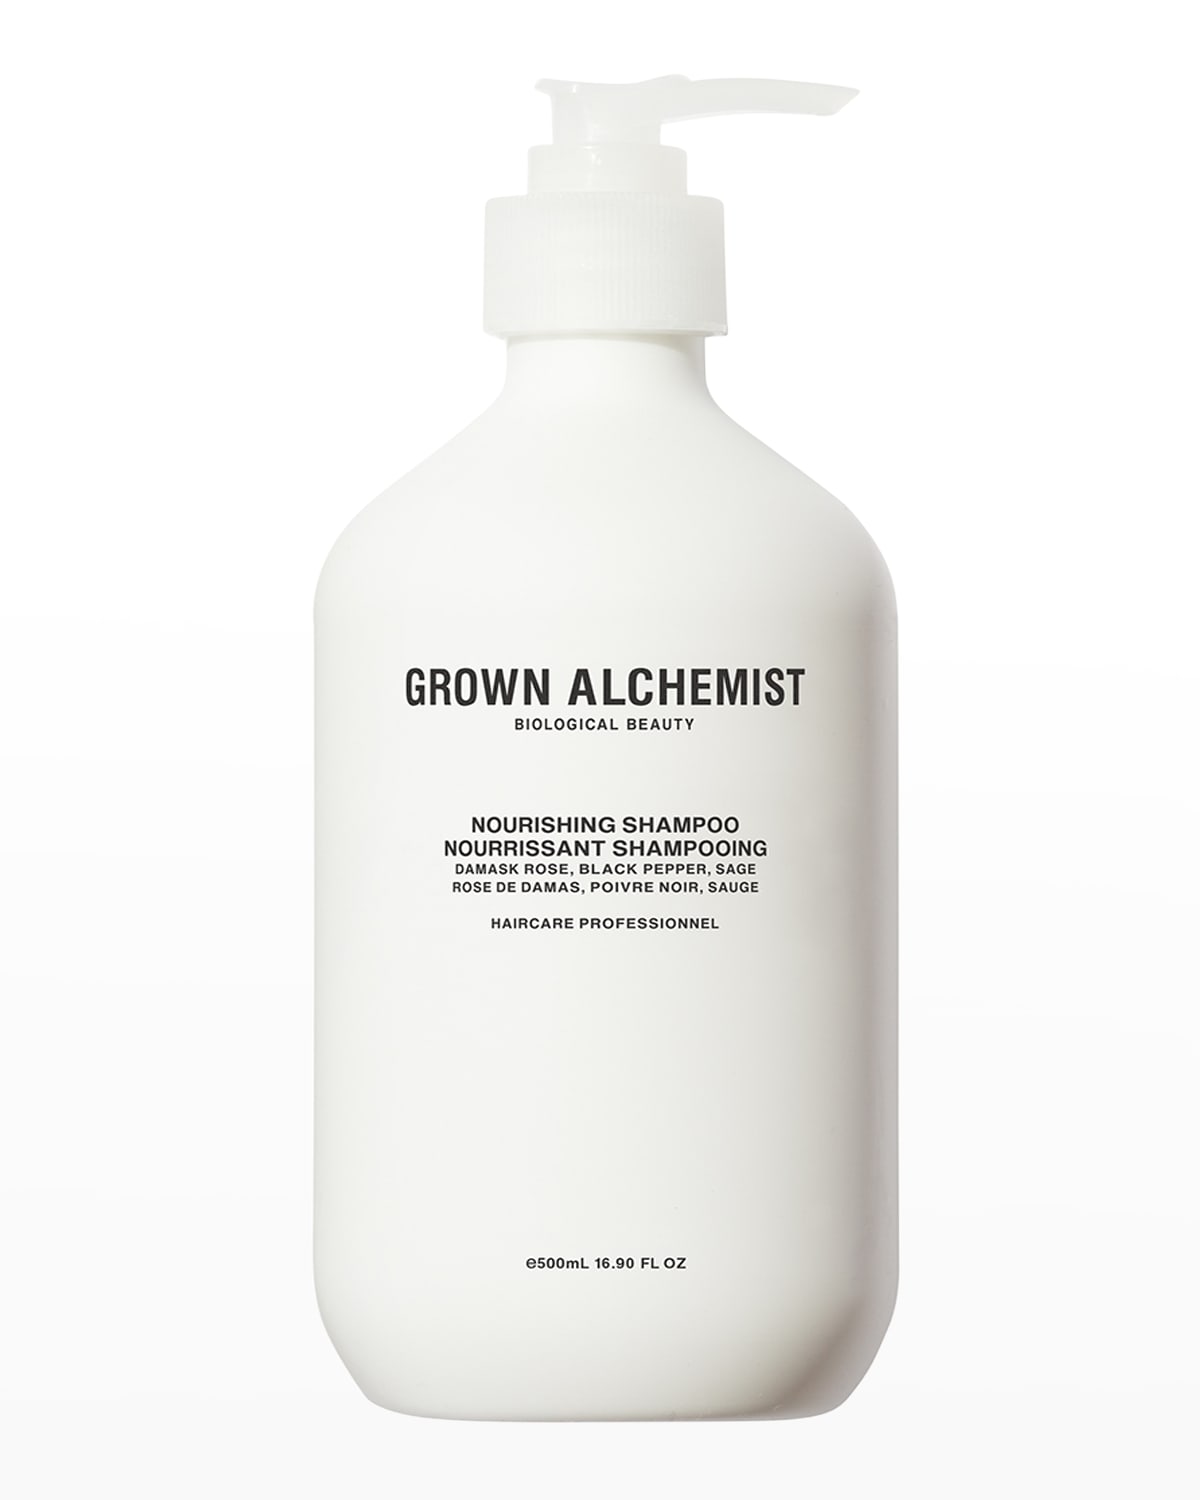 Grown Alchemist Nourishing Shampoo 0.6, 16.9 oz./ 500 mL